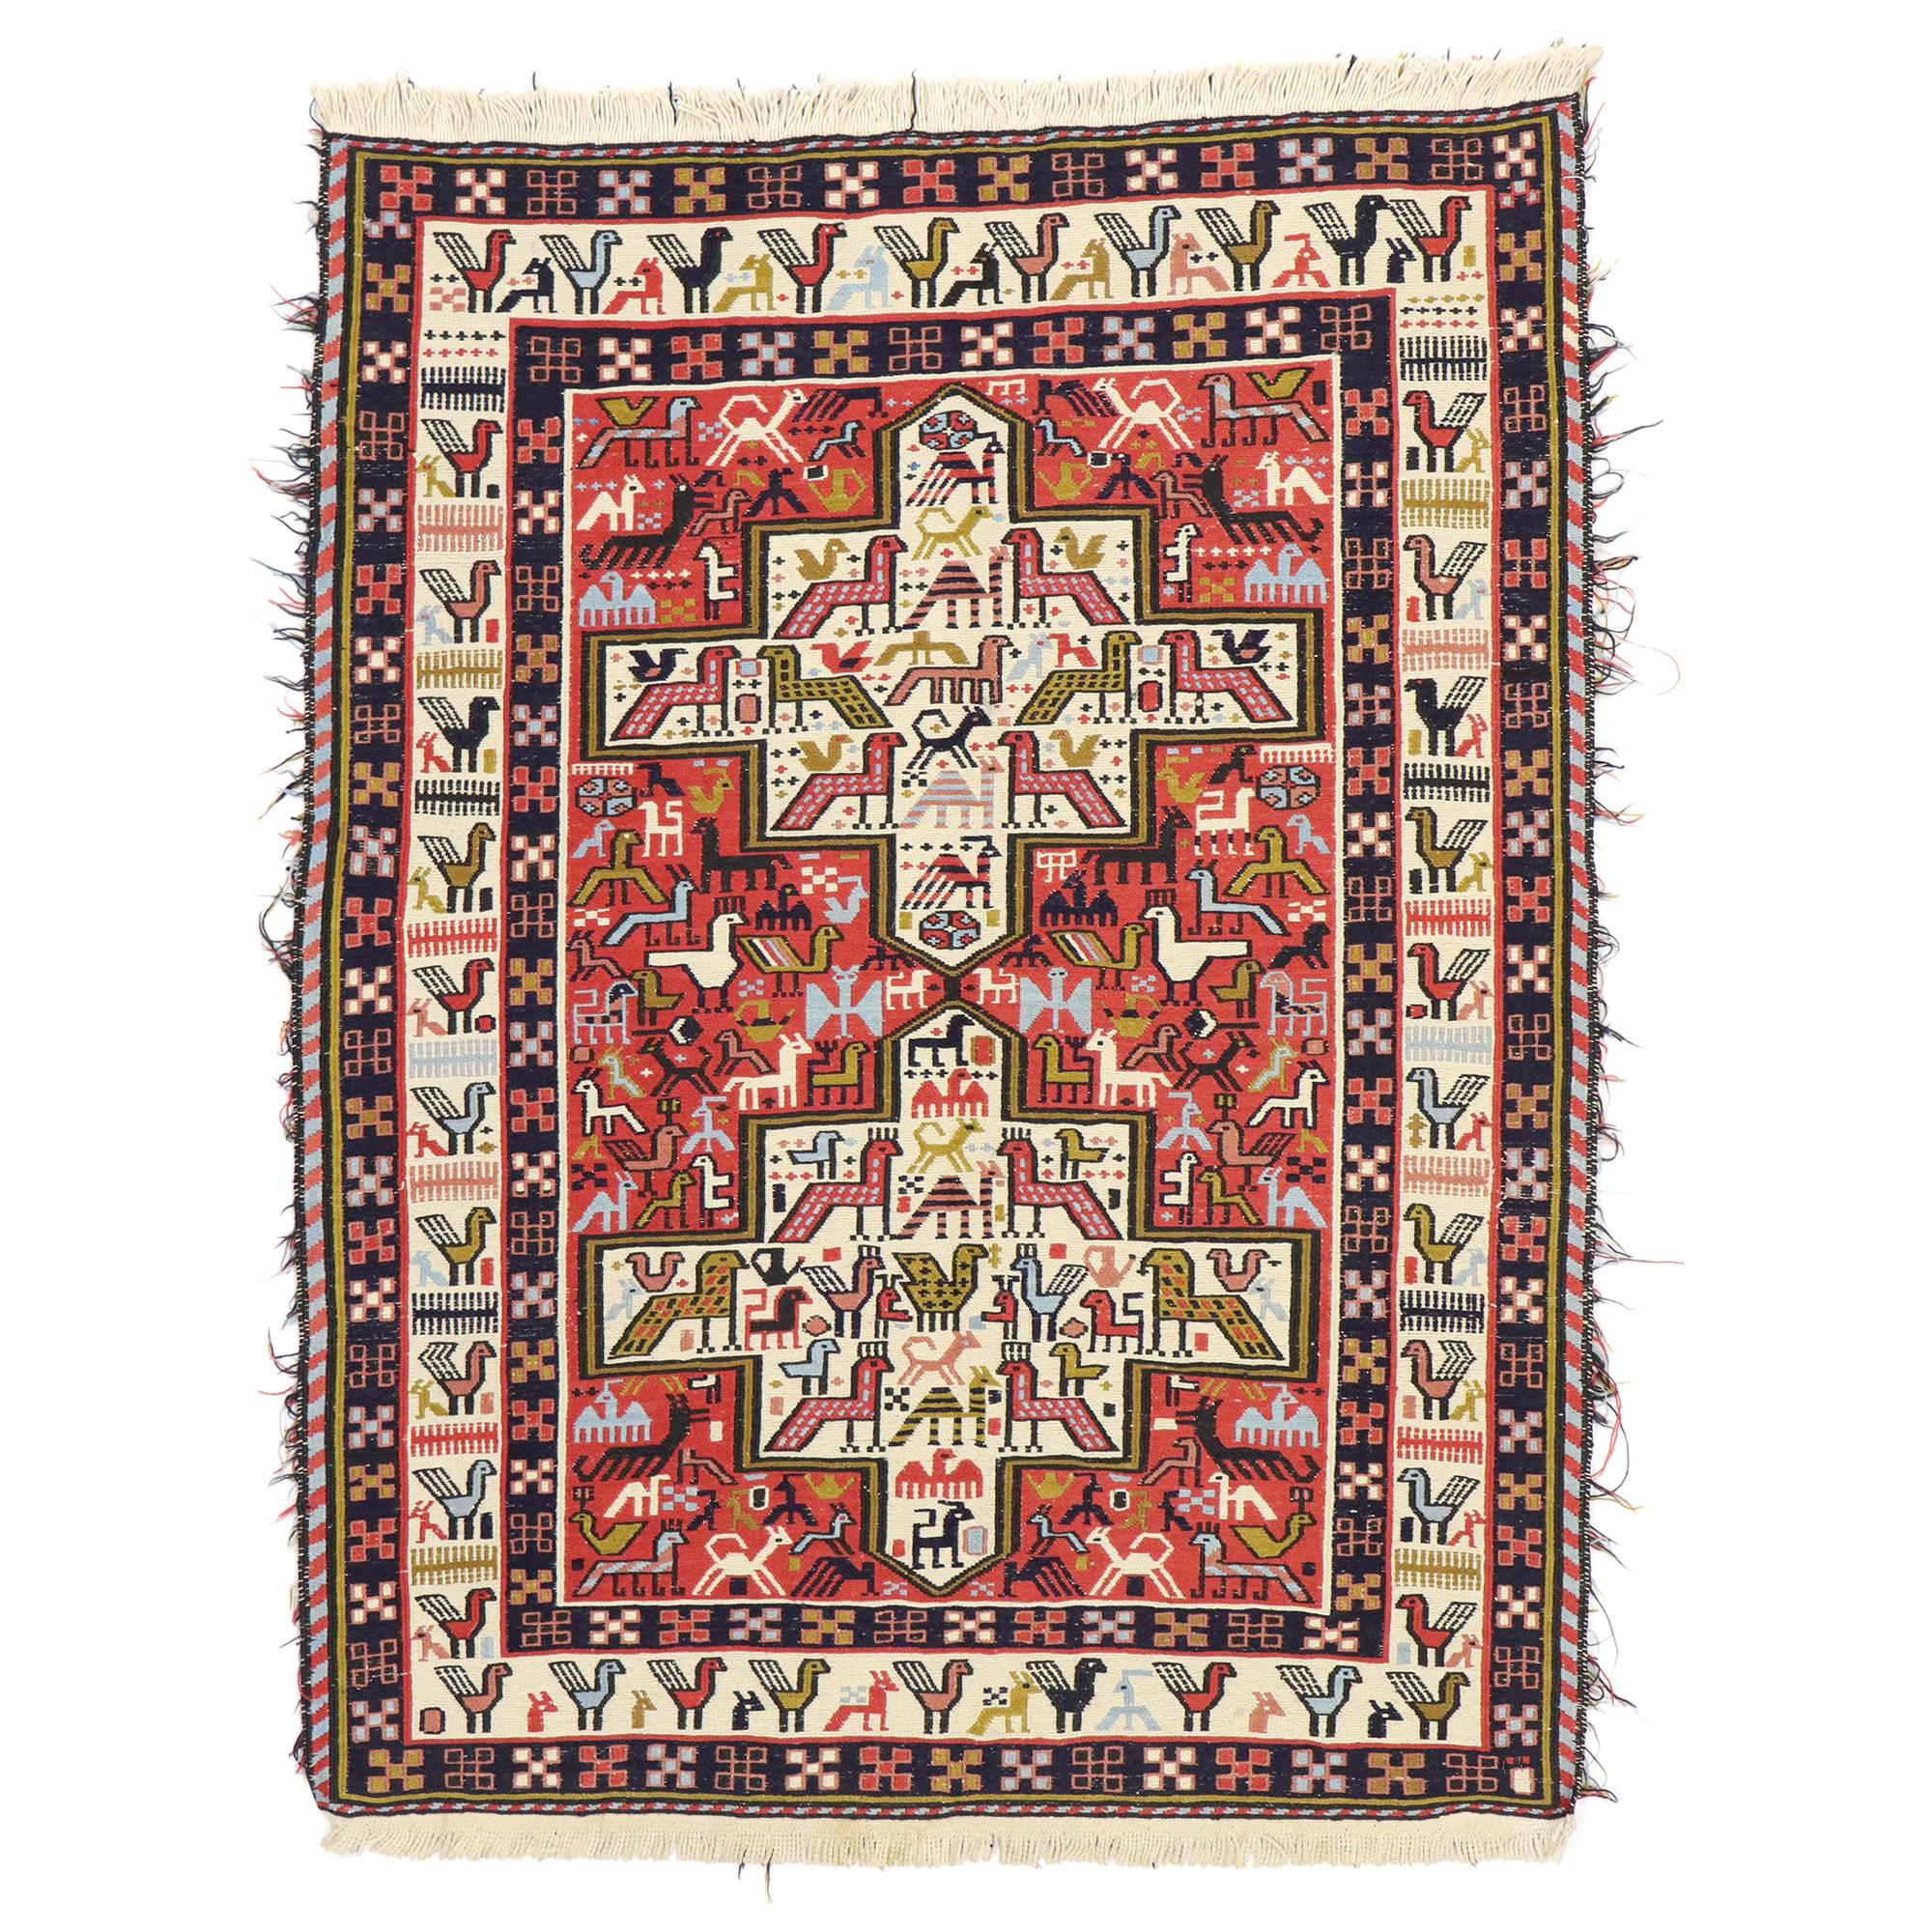 Vintage Persian Soumak Kilim Rug with Caucasian Nomadic Tribal Style